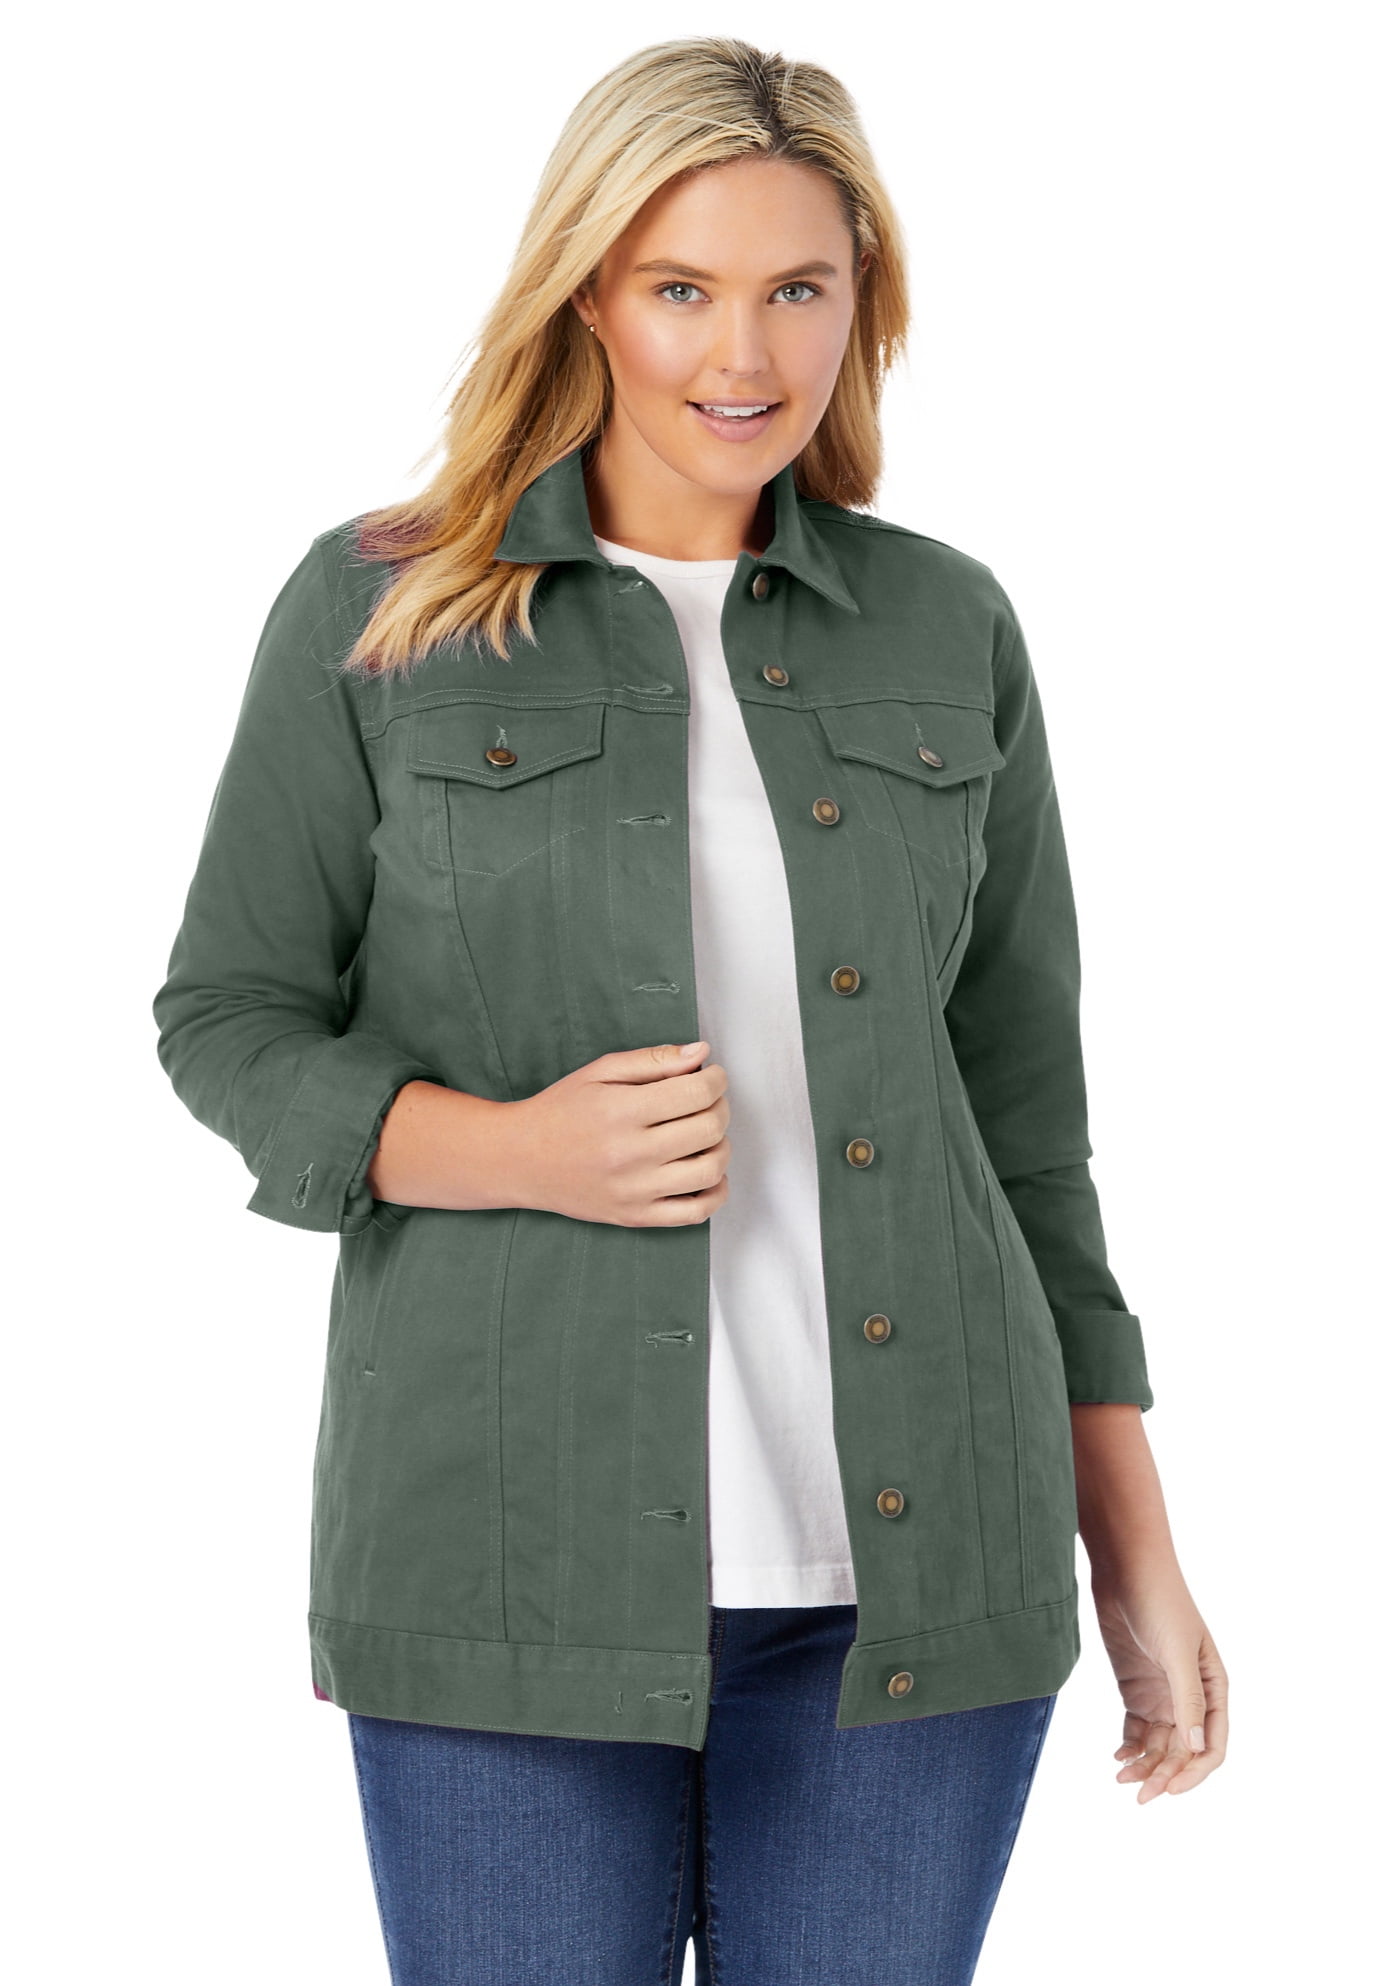 plus size women's army style jacket